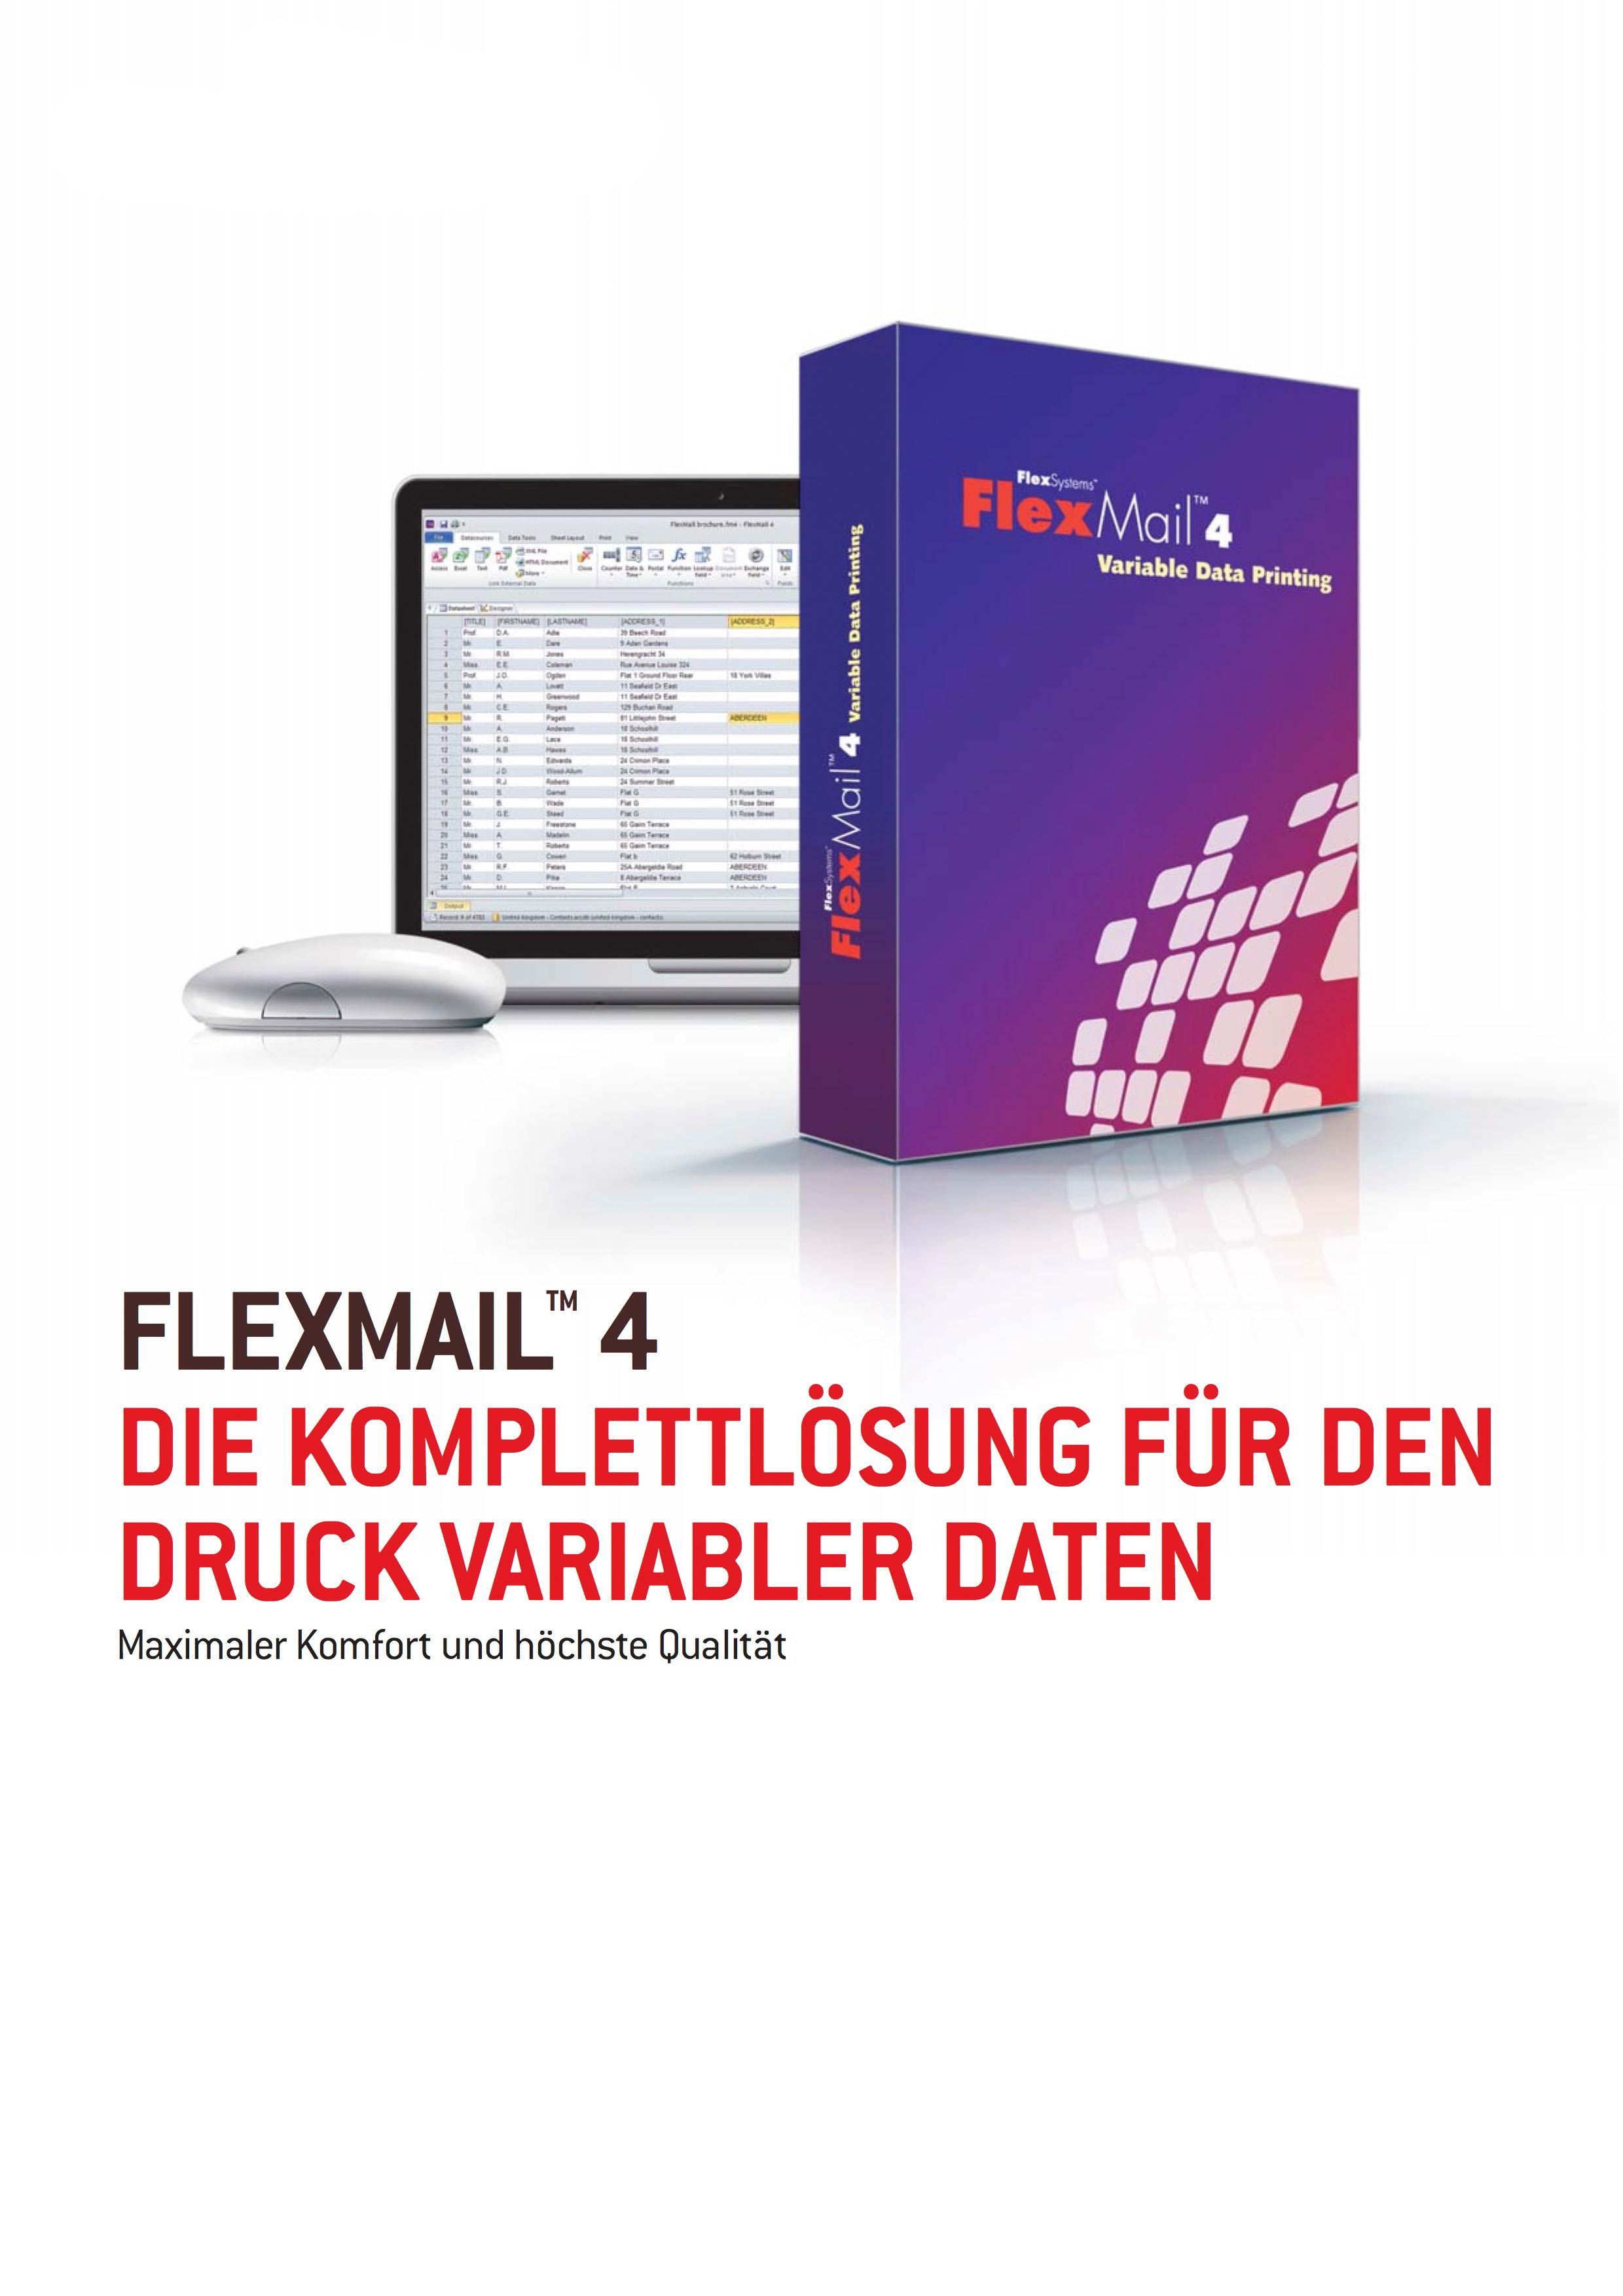 flexmail 3 software